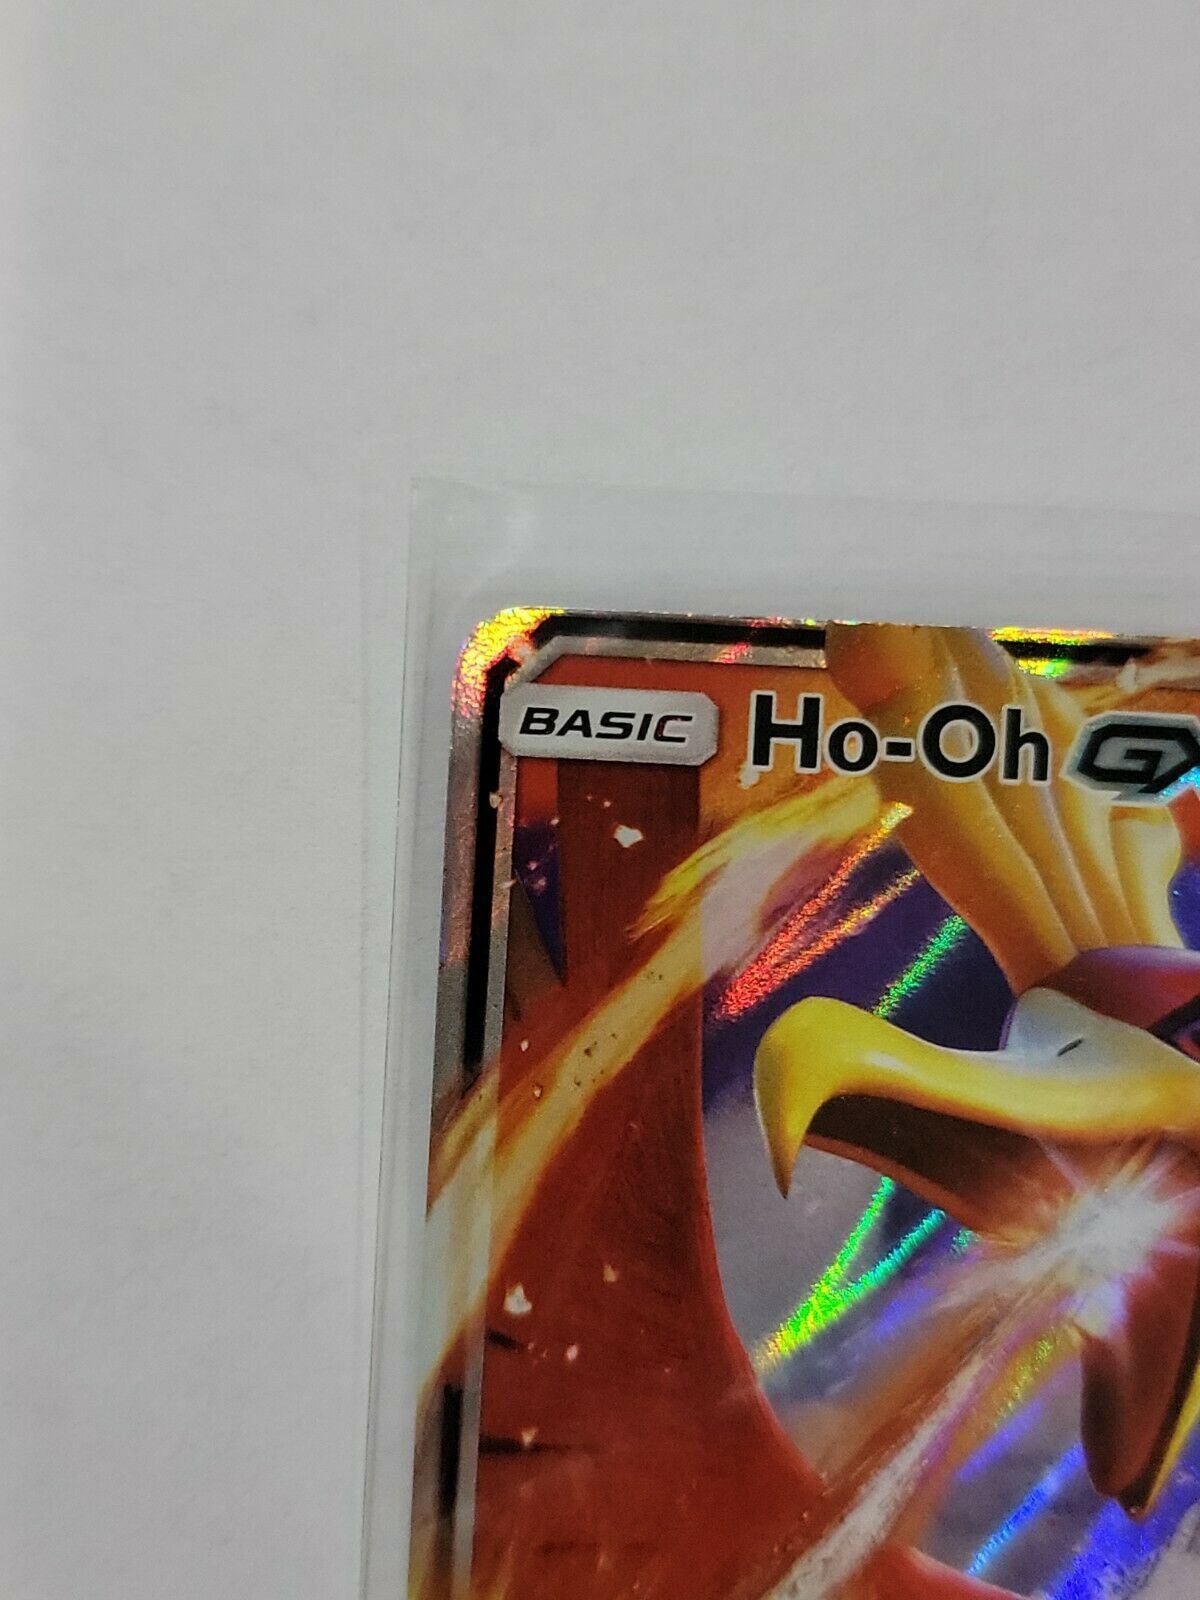  Pokemon Ho-Oh-GX - 131/147 - Full Art Ultra Rare - Sun